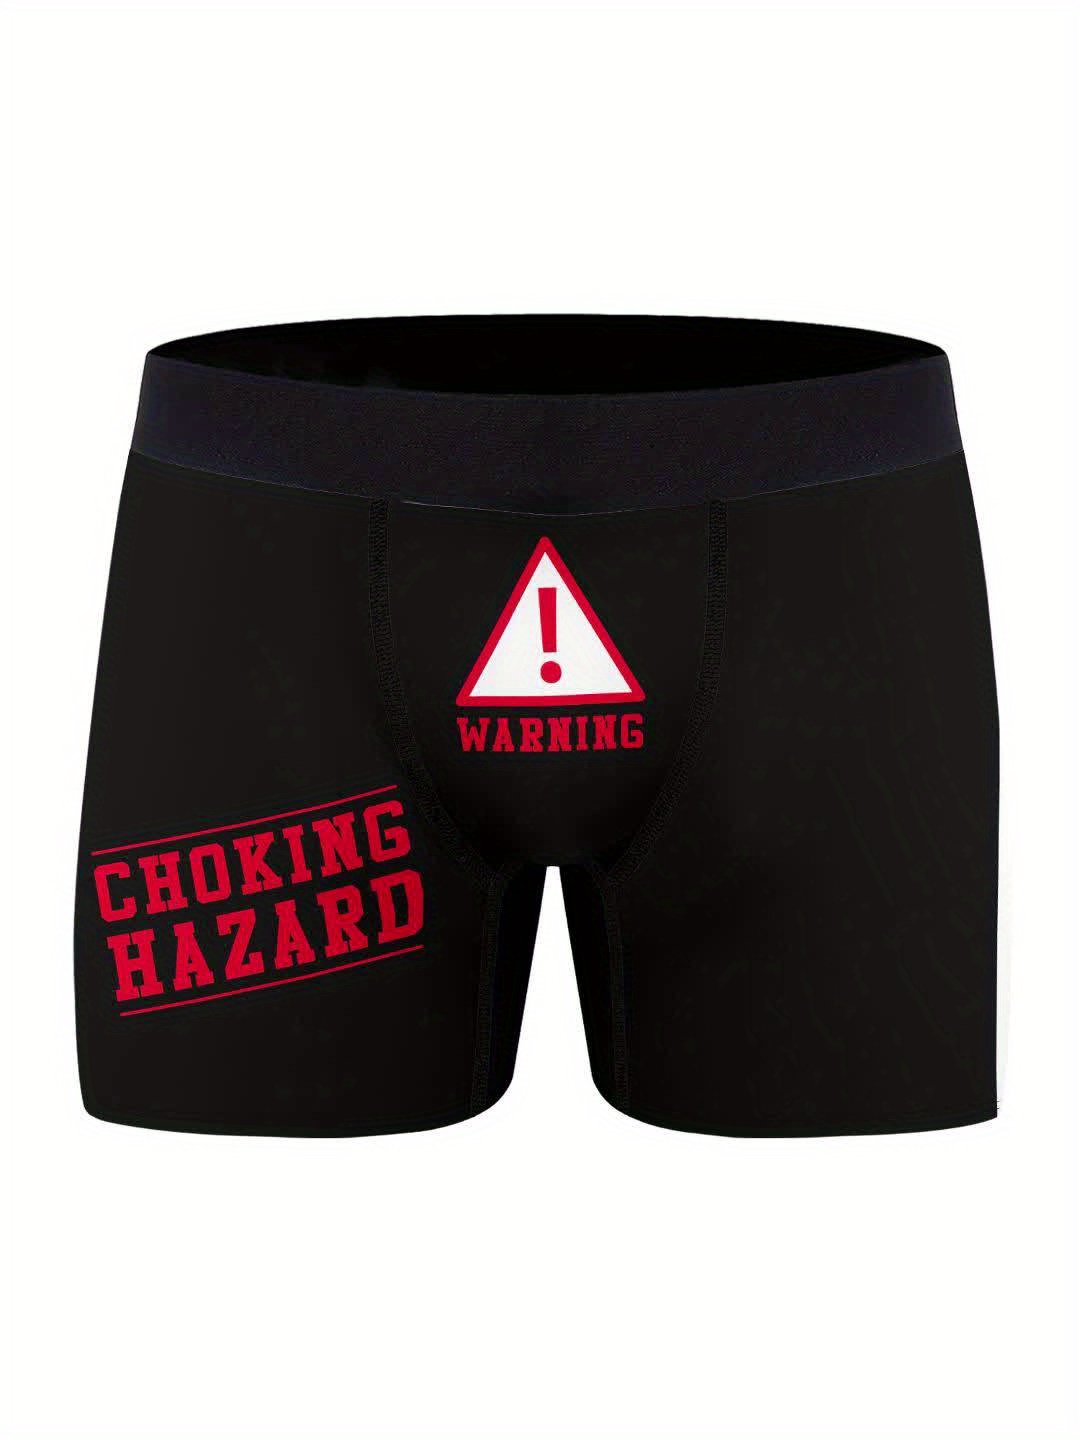 Warning Choking Hazard 2 Men'S Boxer Briefs Humor Graphic Gift For